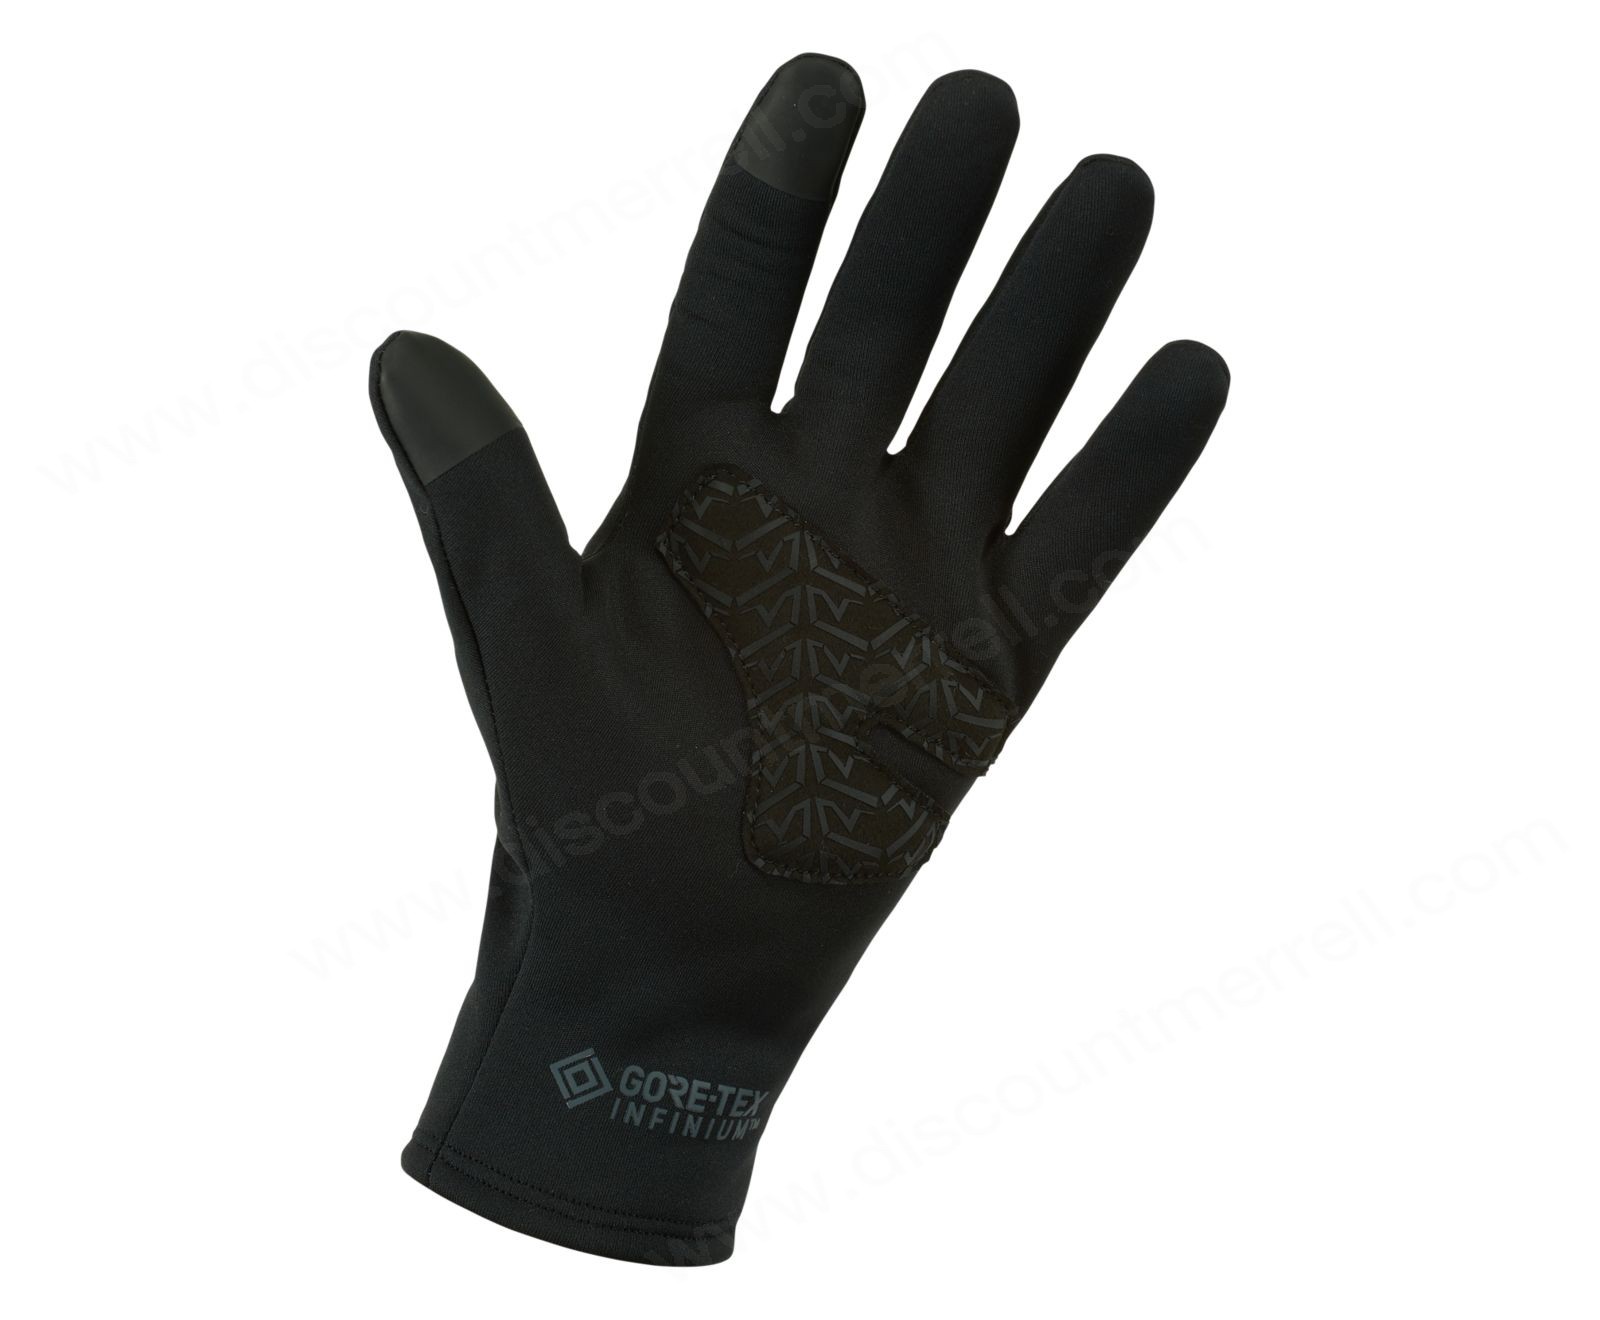 Merrell - GORE-TEX® Softshell Fleece Lined Glove - Merrell - GORE-TEX® Softshell Fleece Lined Glove